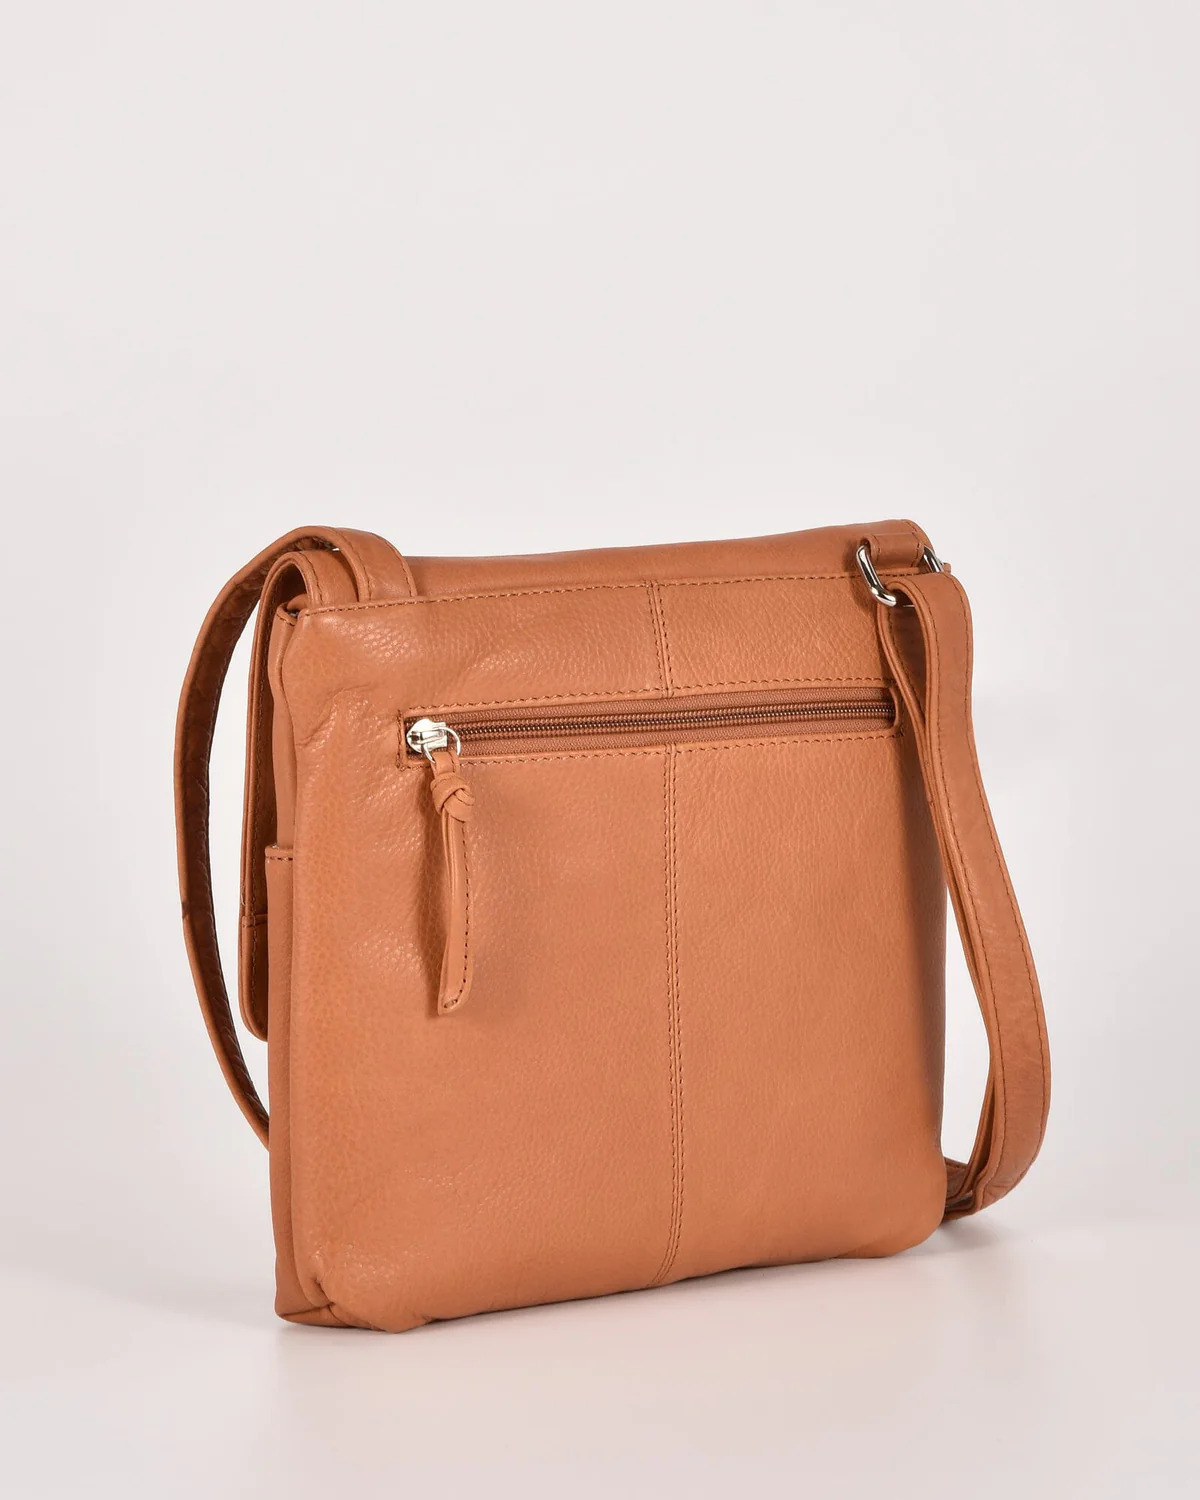 MariaKinz Soft Leather 4 Zipper Pockets Crossbody Purse and Handbag